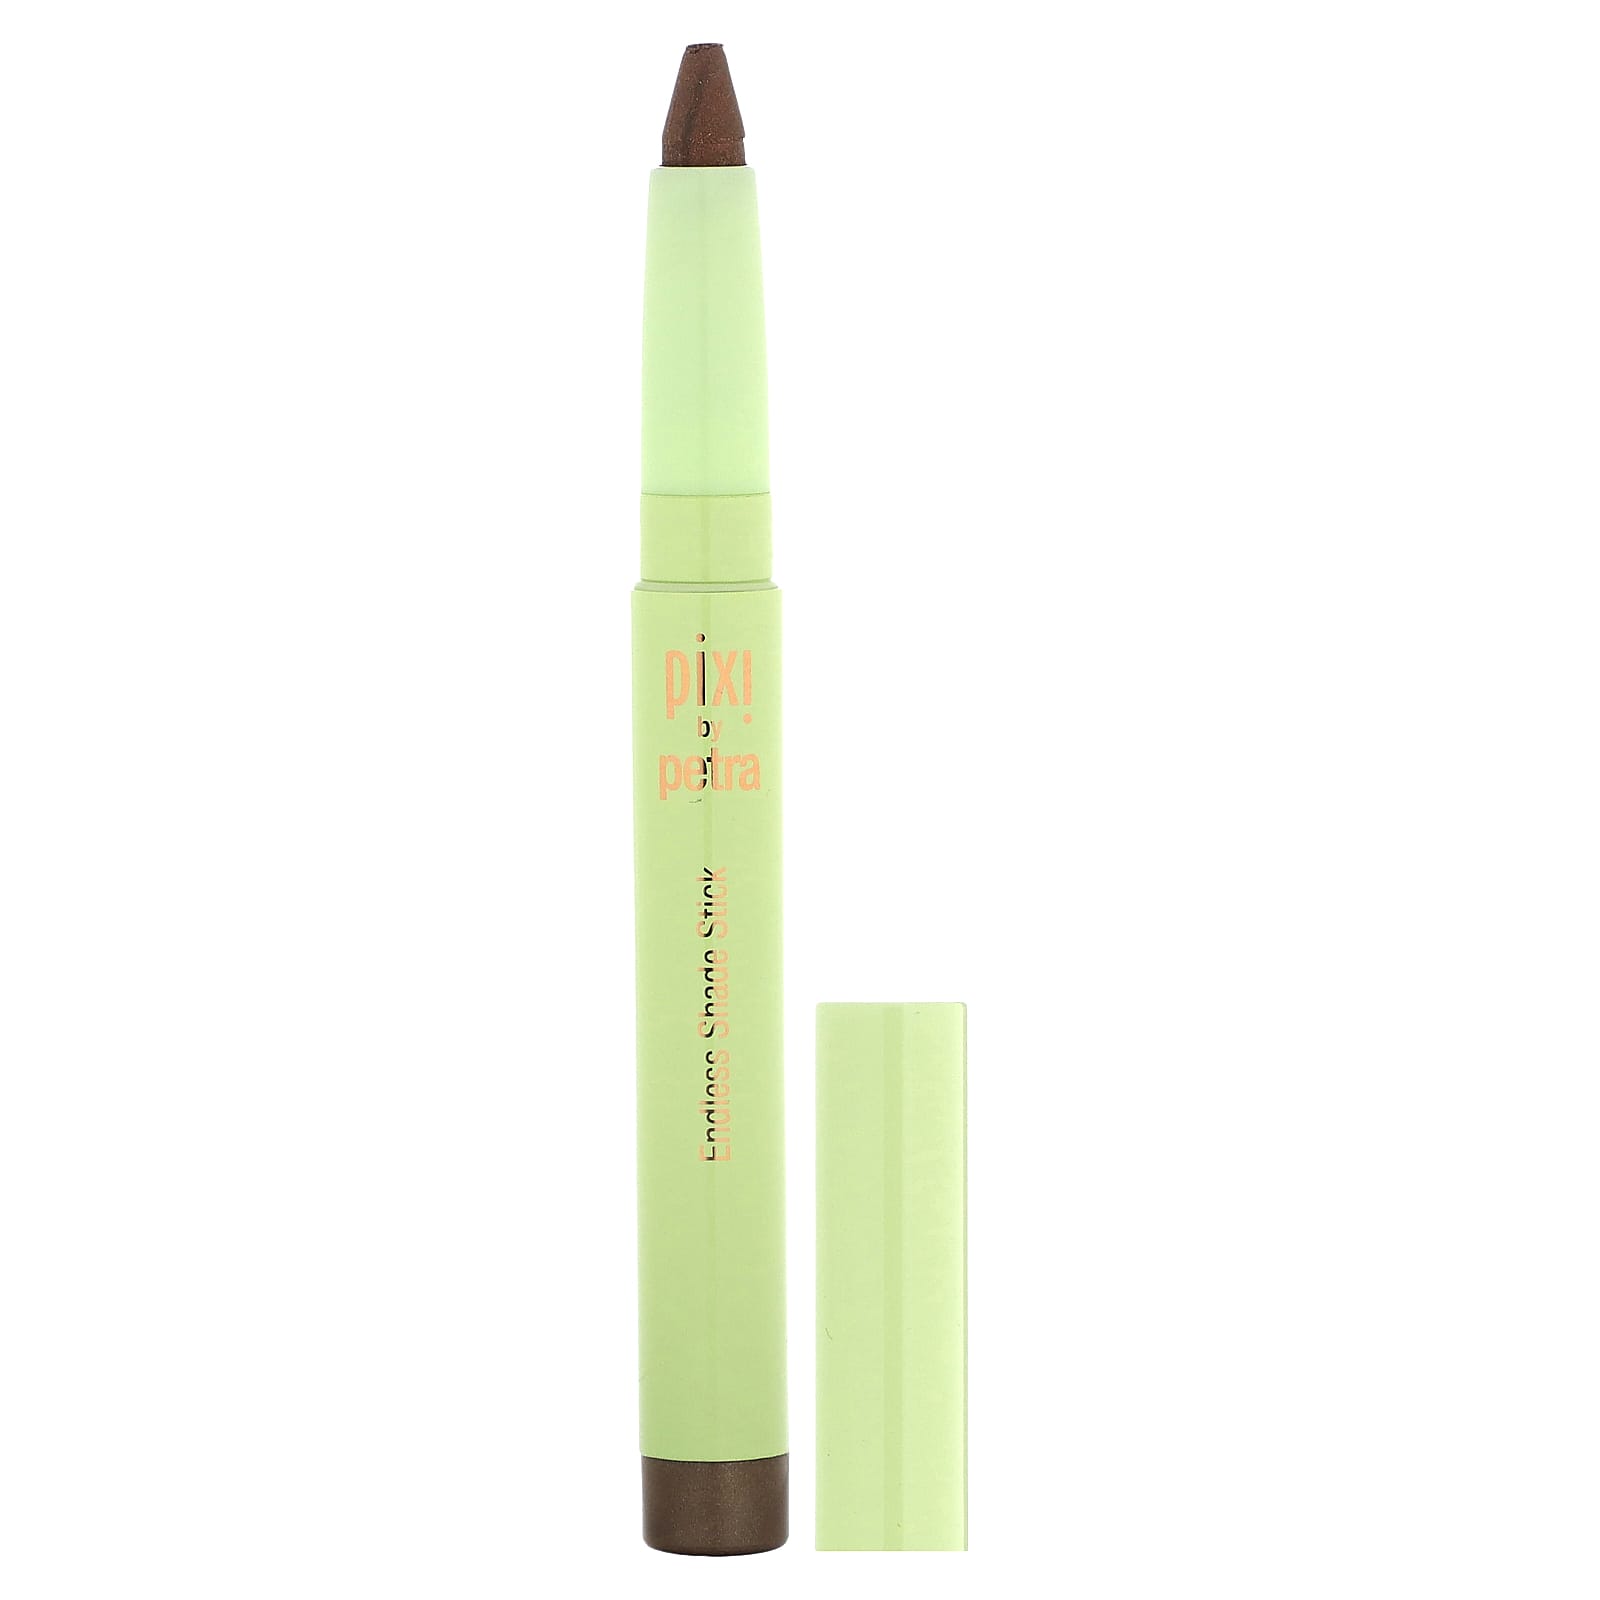 Pixi Beauty-Endless Shade Stick-Eyeshadow Stick-0231 BronzeBlaze-0.05 oz (1.5 g)